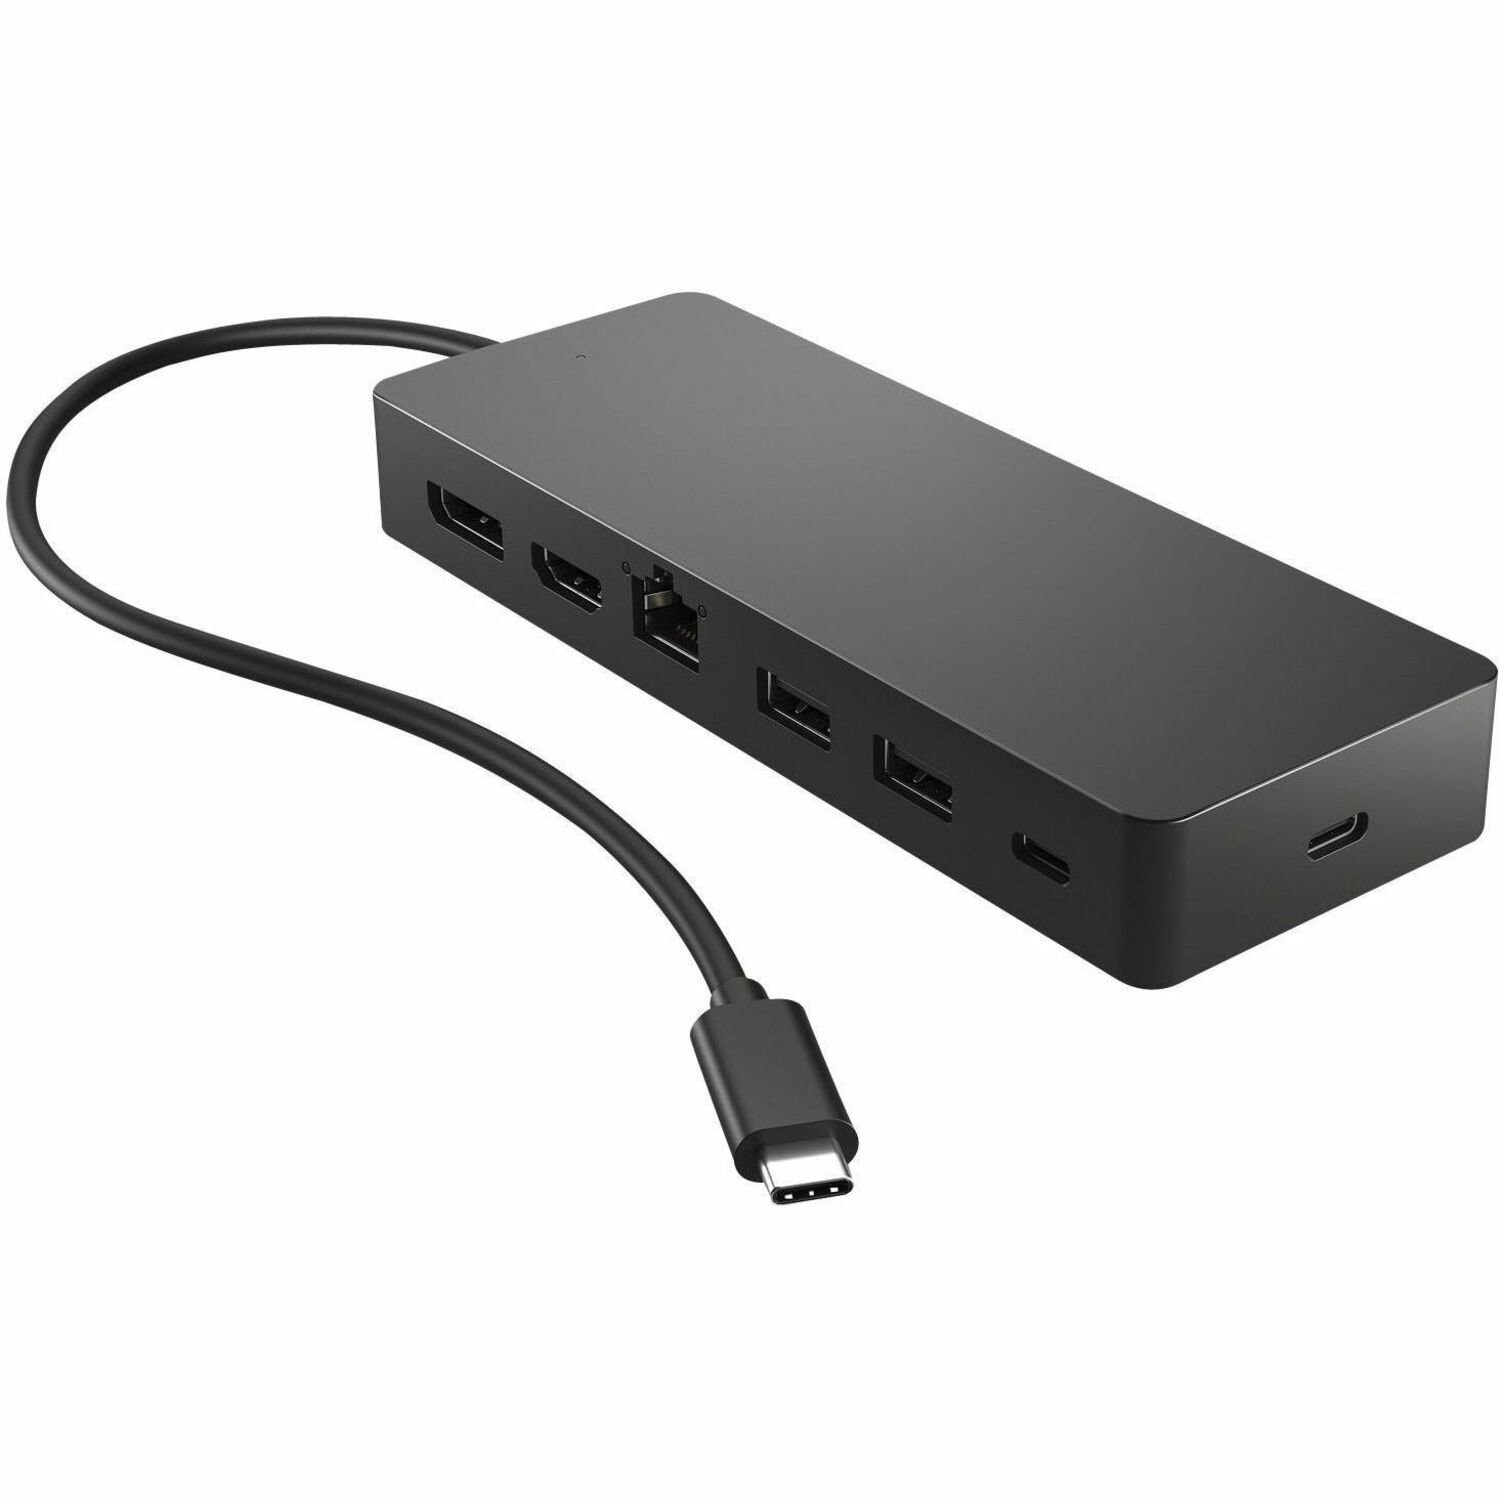 HP USB Type C Docking Station for Notebook/Desktop PC - Memory Card Reader - microSD, SD